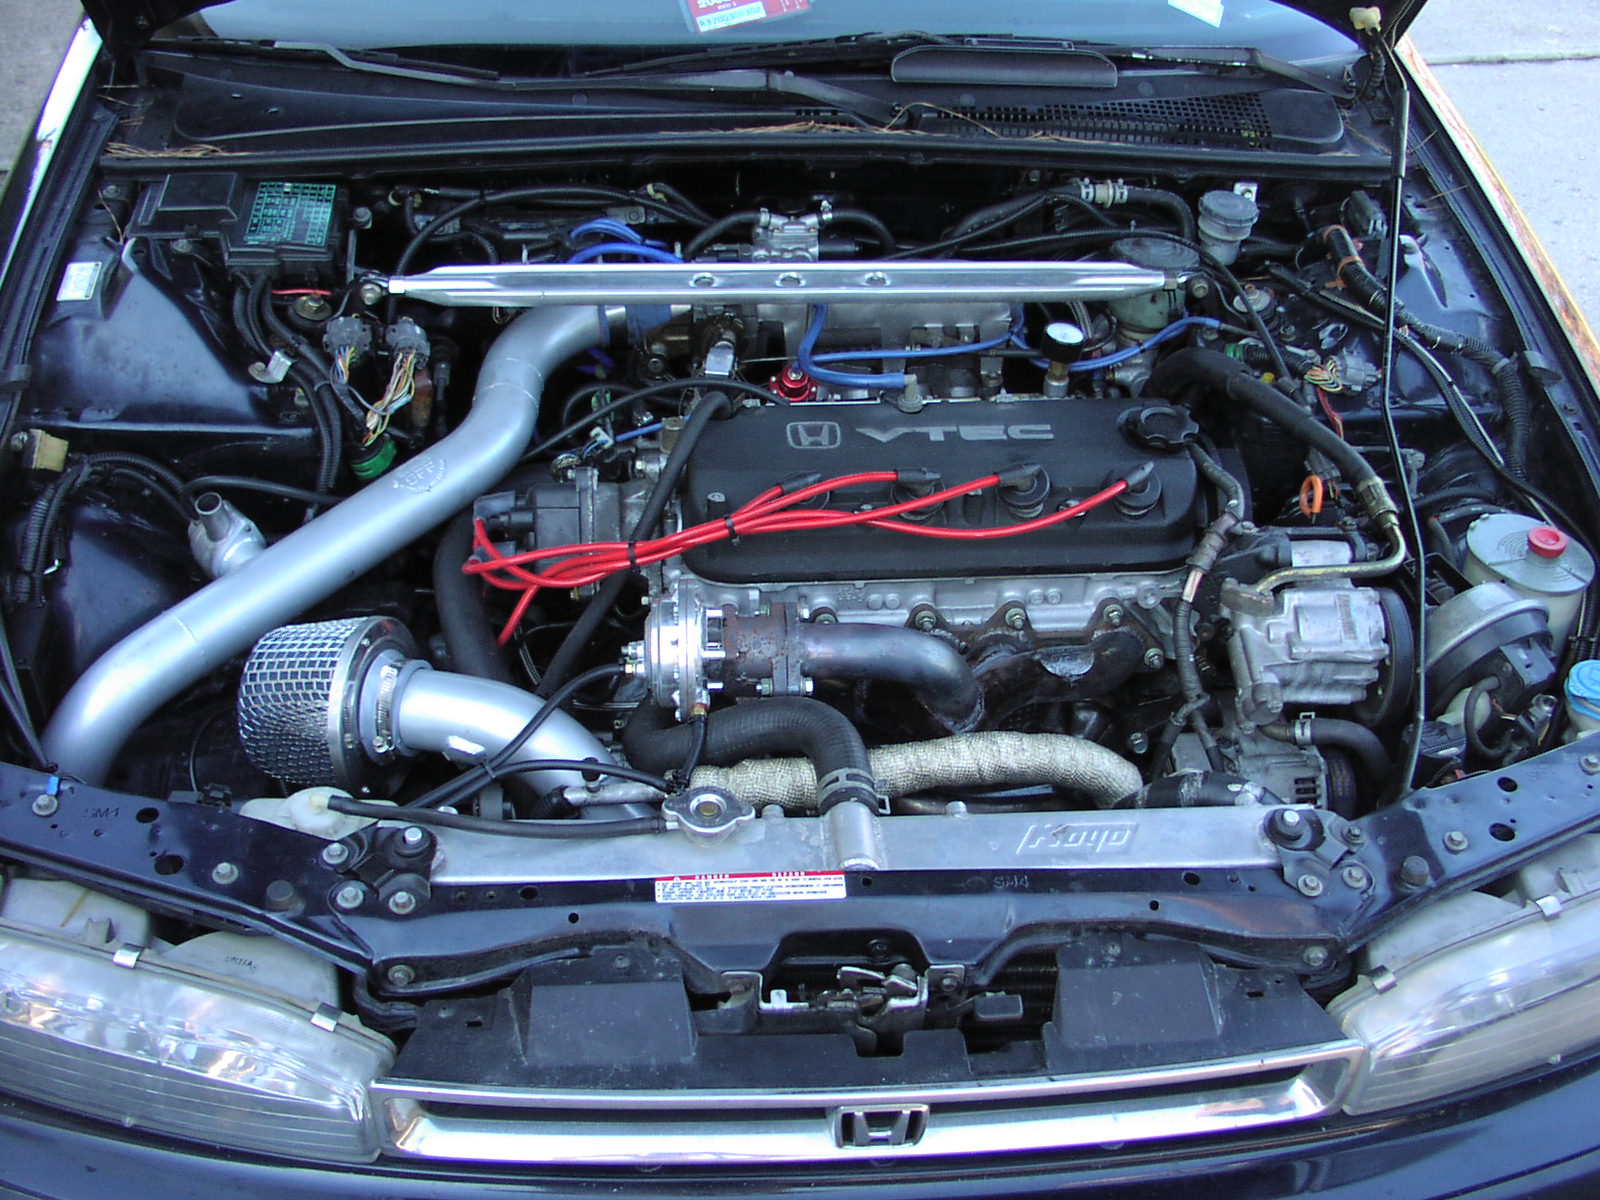 2001 Honda accord v6 turbo kit #1